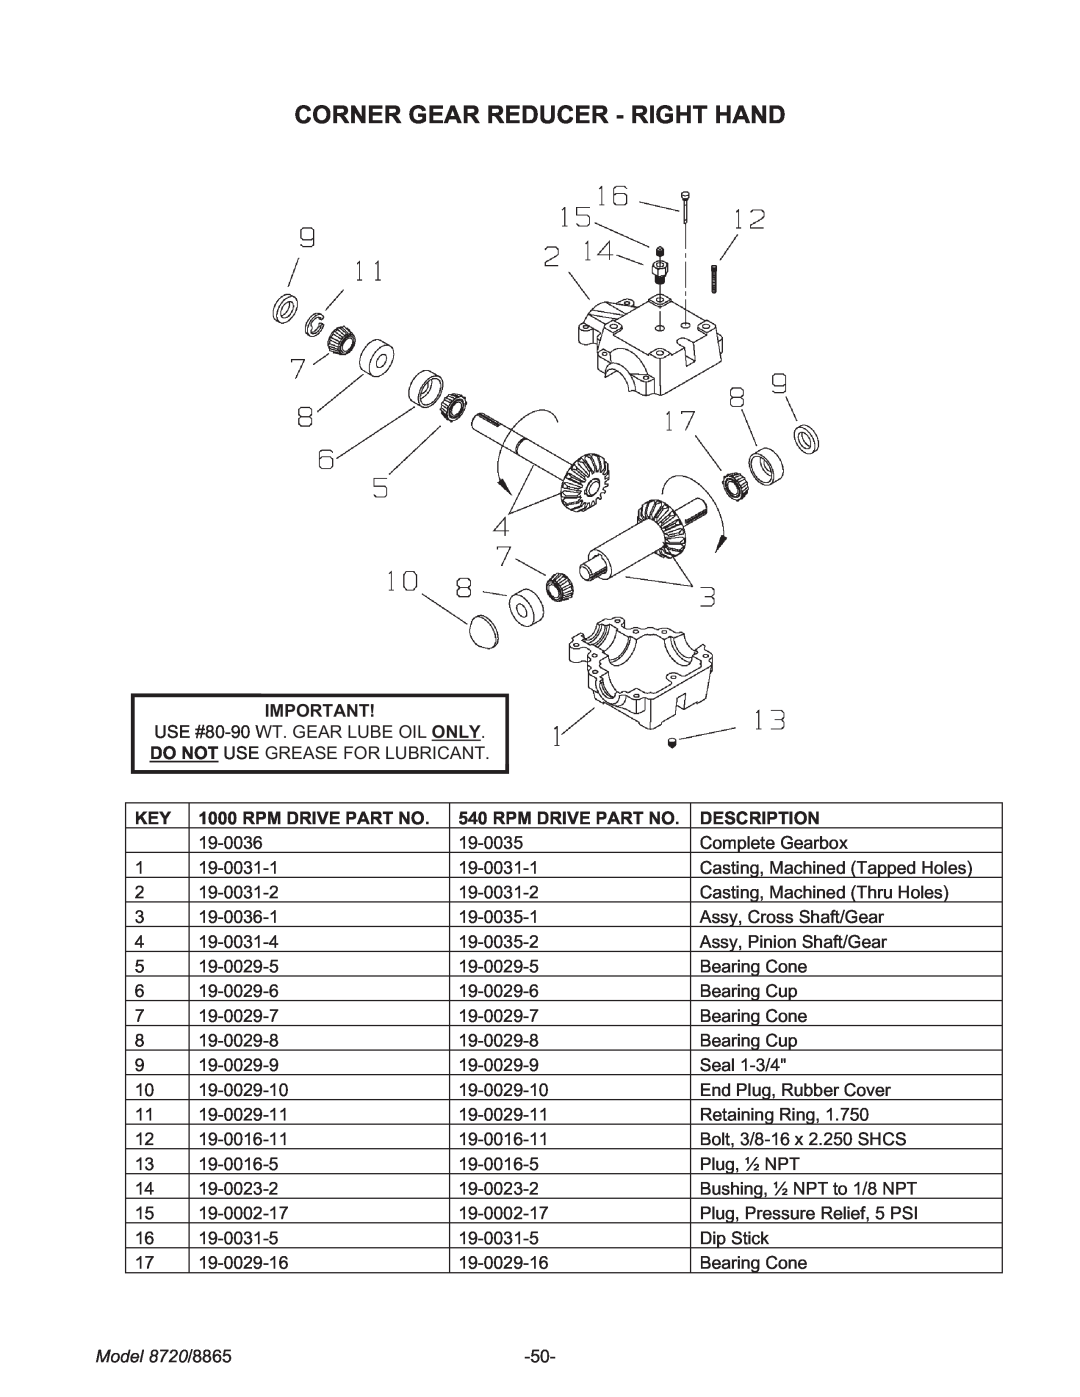 Meyer manual Corner Gear Reducer - Right Hand, Rpm Drive Part No, Description, Model 8720/8865 